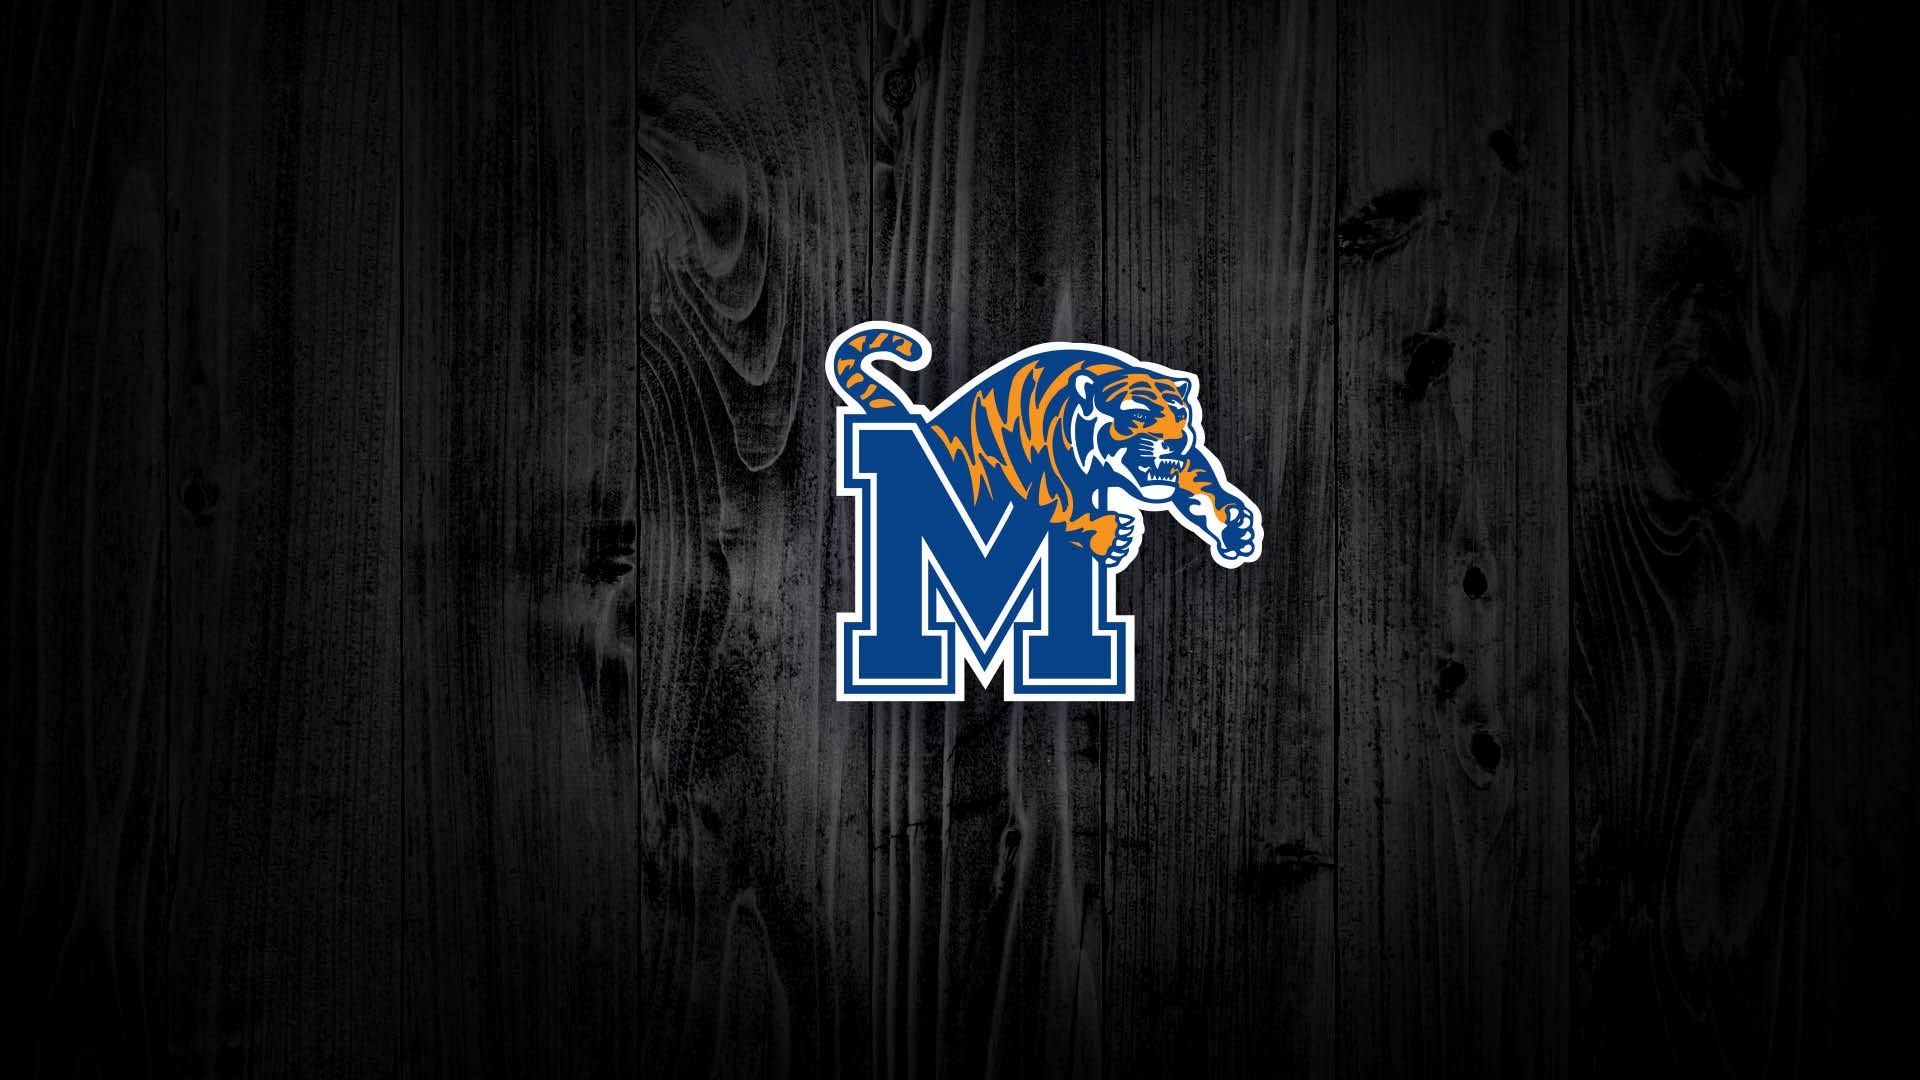 Memphis Tigers basketball logo  Memphis tigers, Memphis, Tiger logo